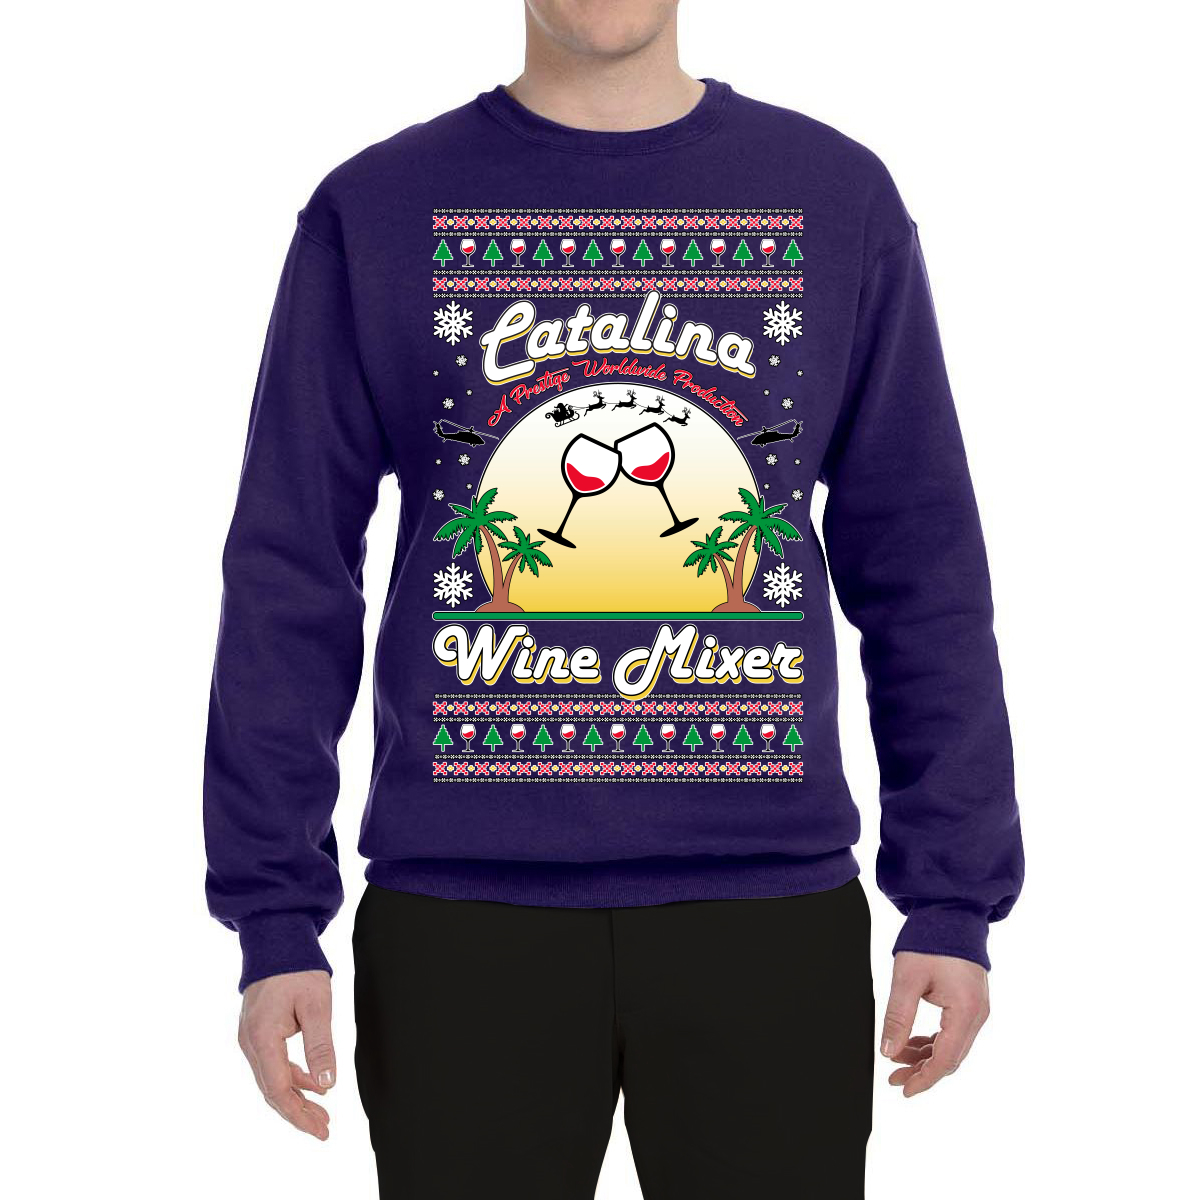 Wild Bobby, Step Bros Catalina Wine Mixer Xmas Holiday Movie Humor Ugly Christmas Sweater Unisex Crewneck Graphic Sweatshirt, Purple, XX-Large - image 2 of 5